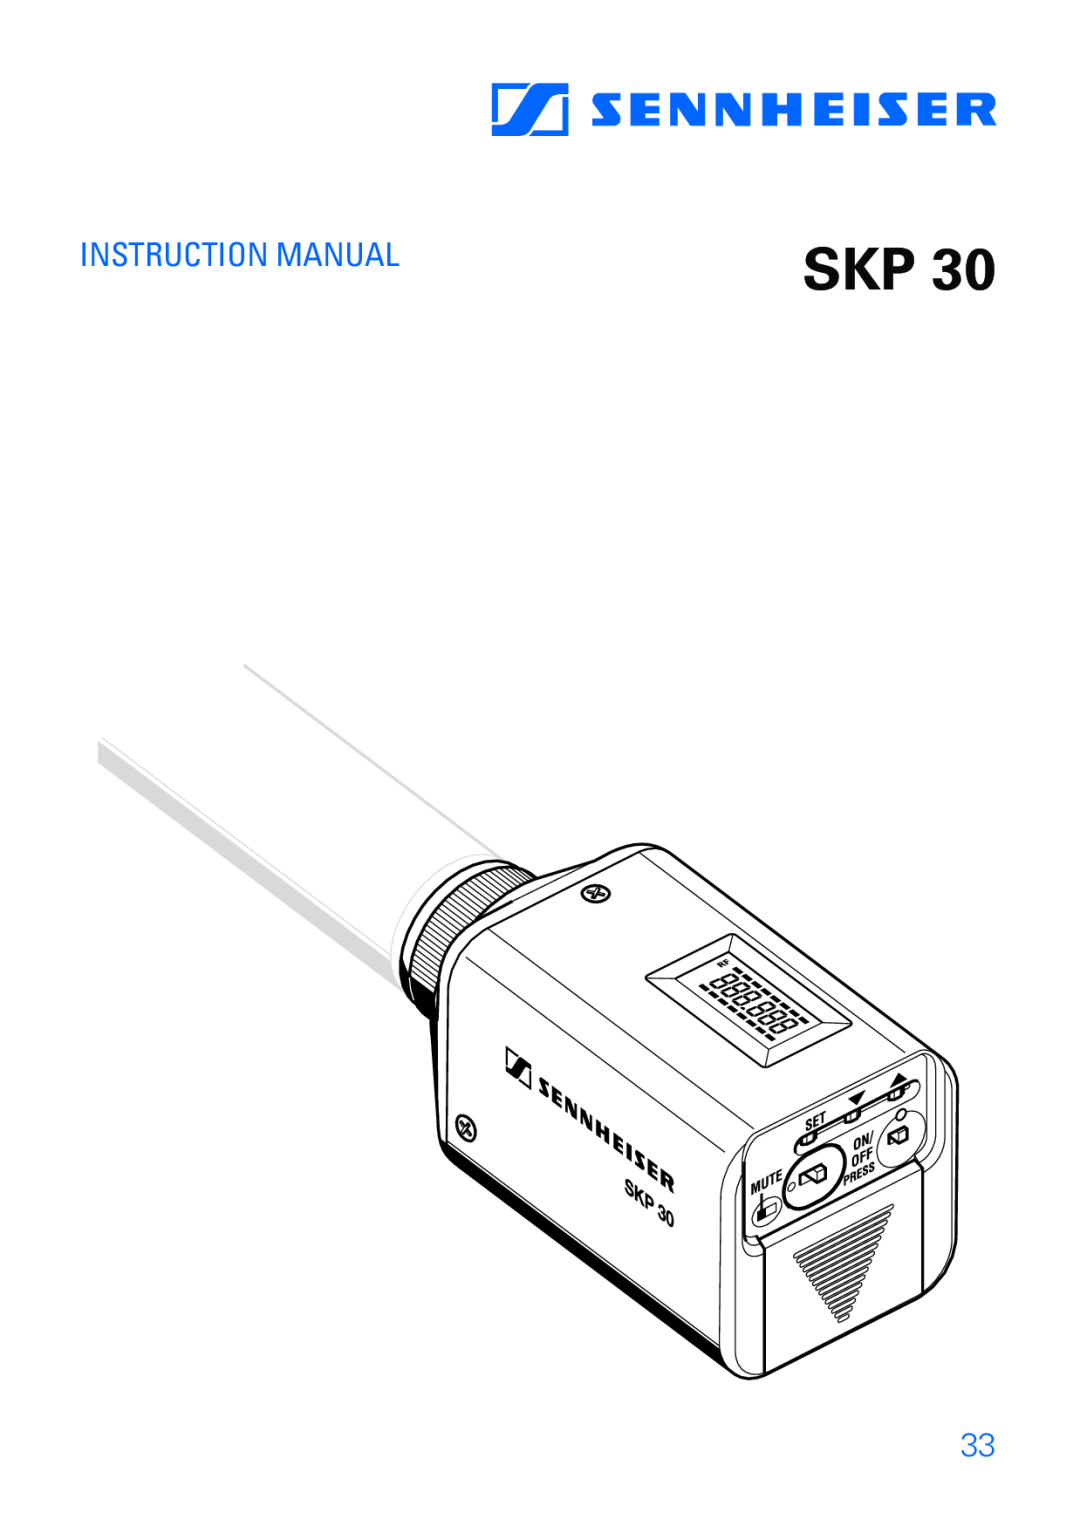 Sennheiser SKP 30 manual Instruction Manual 